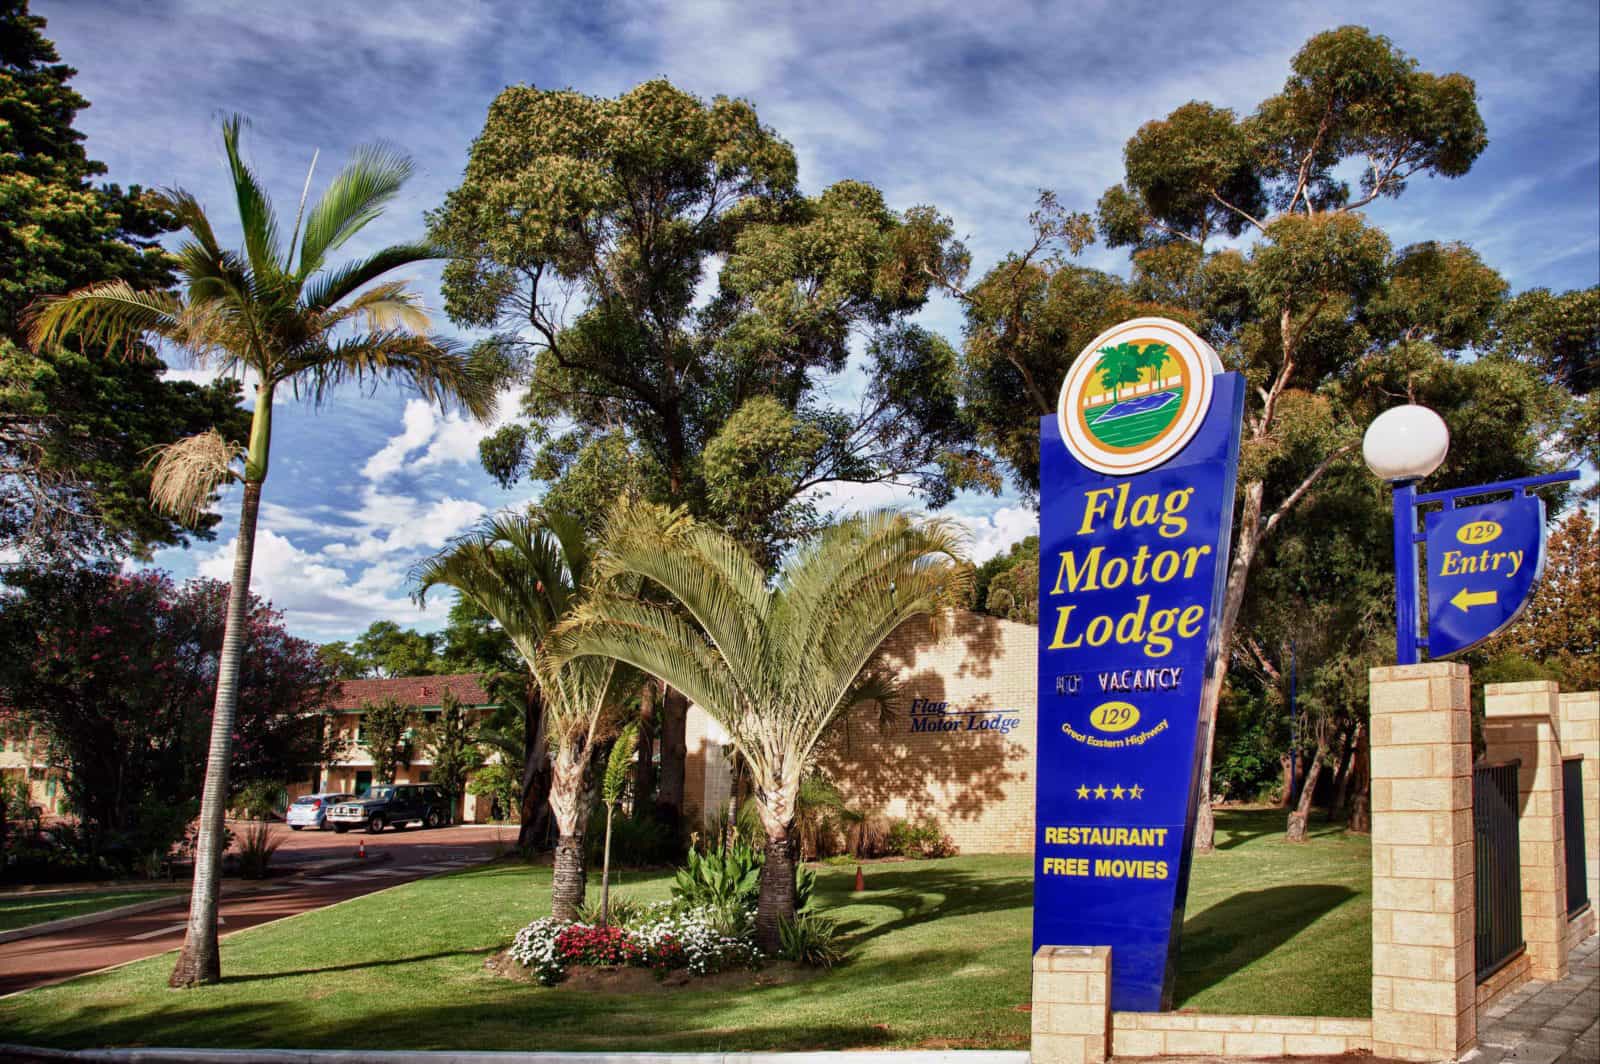 Flag Motor Lodge, Perth, Western Australia